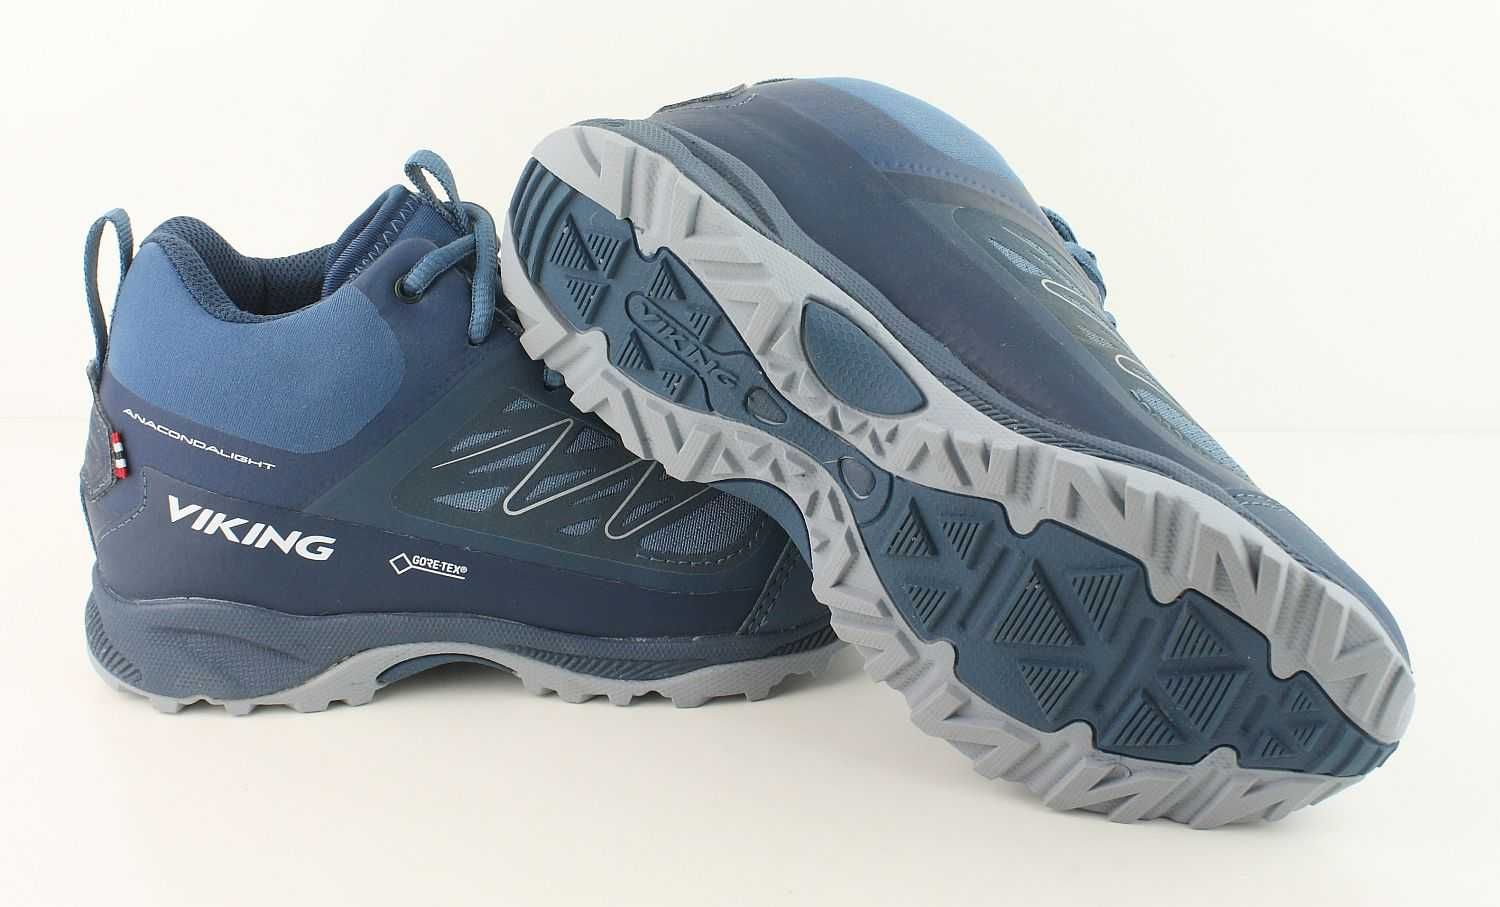 Viking buty trekkingowe damskie ANACONDA MID JR GTX rozmiar 36